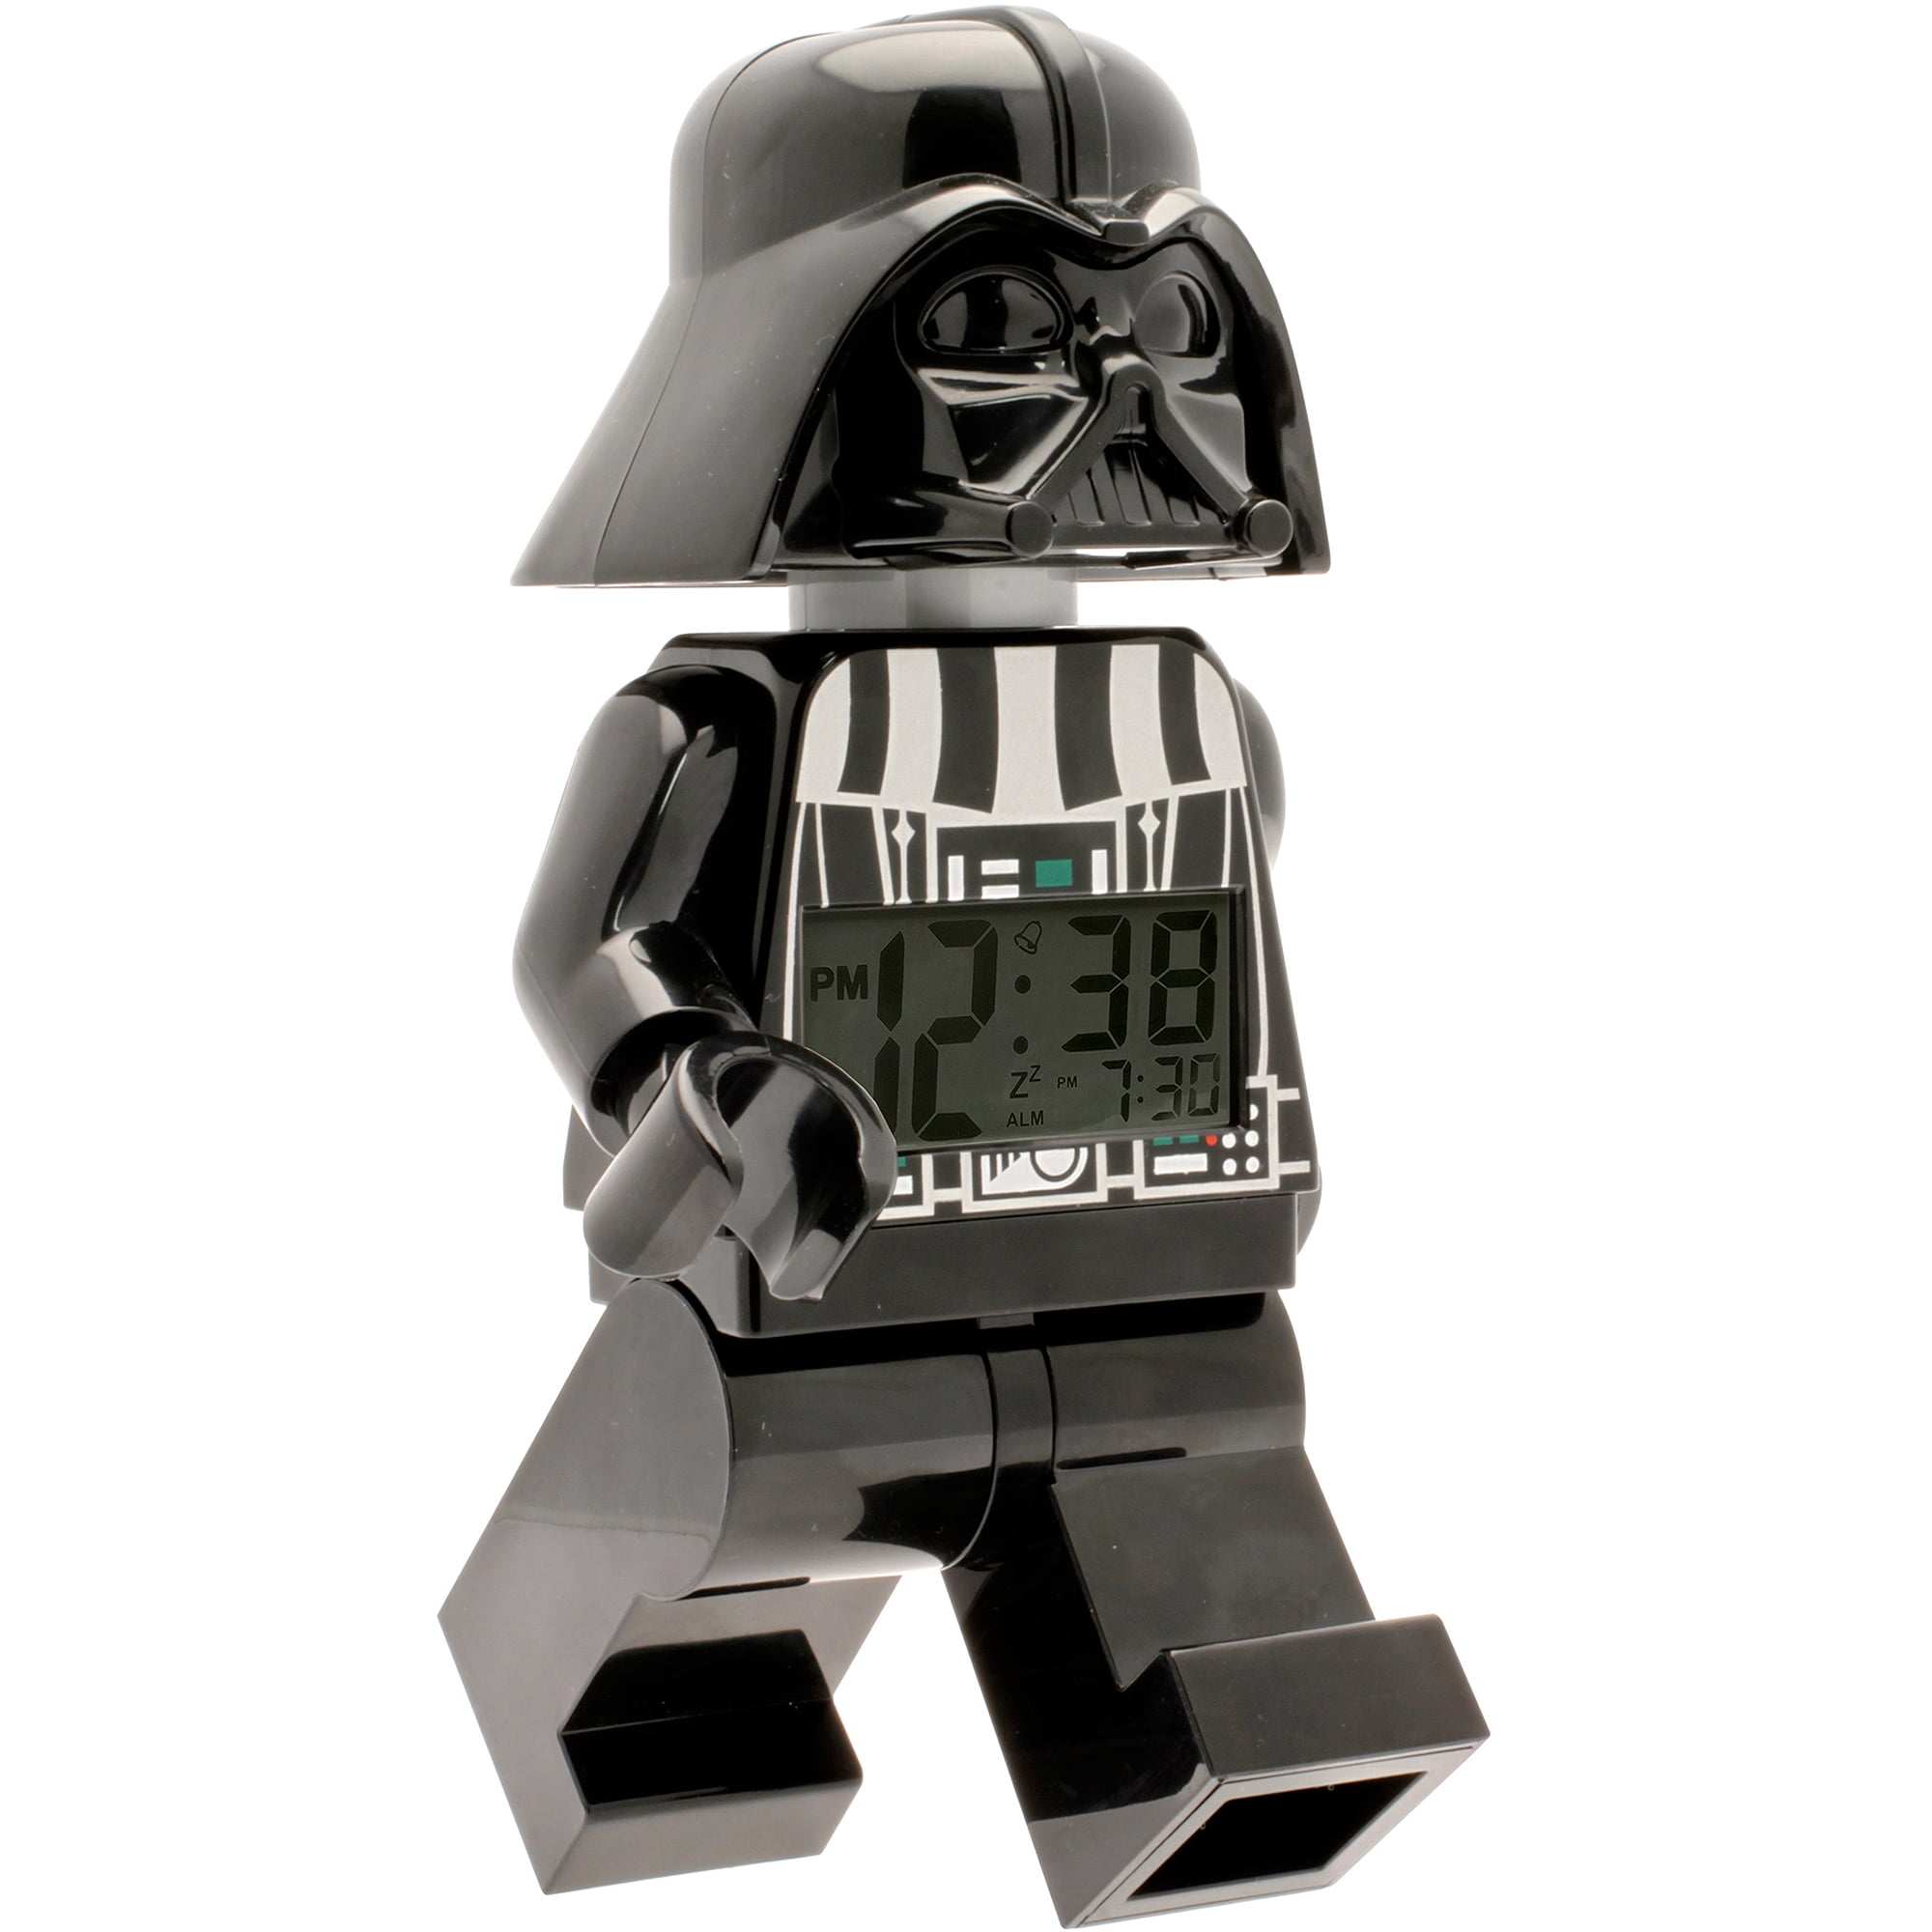 LEGO Star Wars DARTH VADER Digital LED Alarm Clock Minifigure Kids Bedroom New 